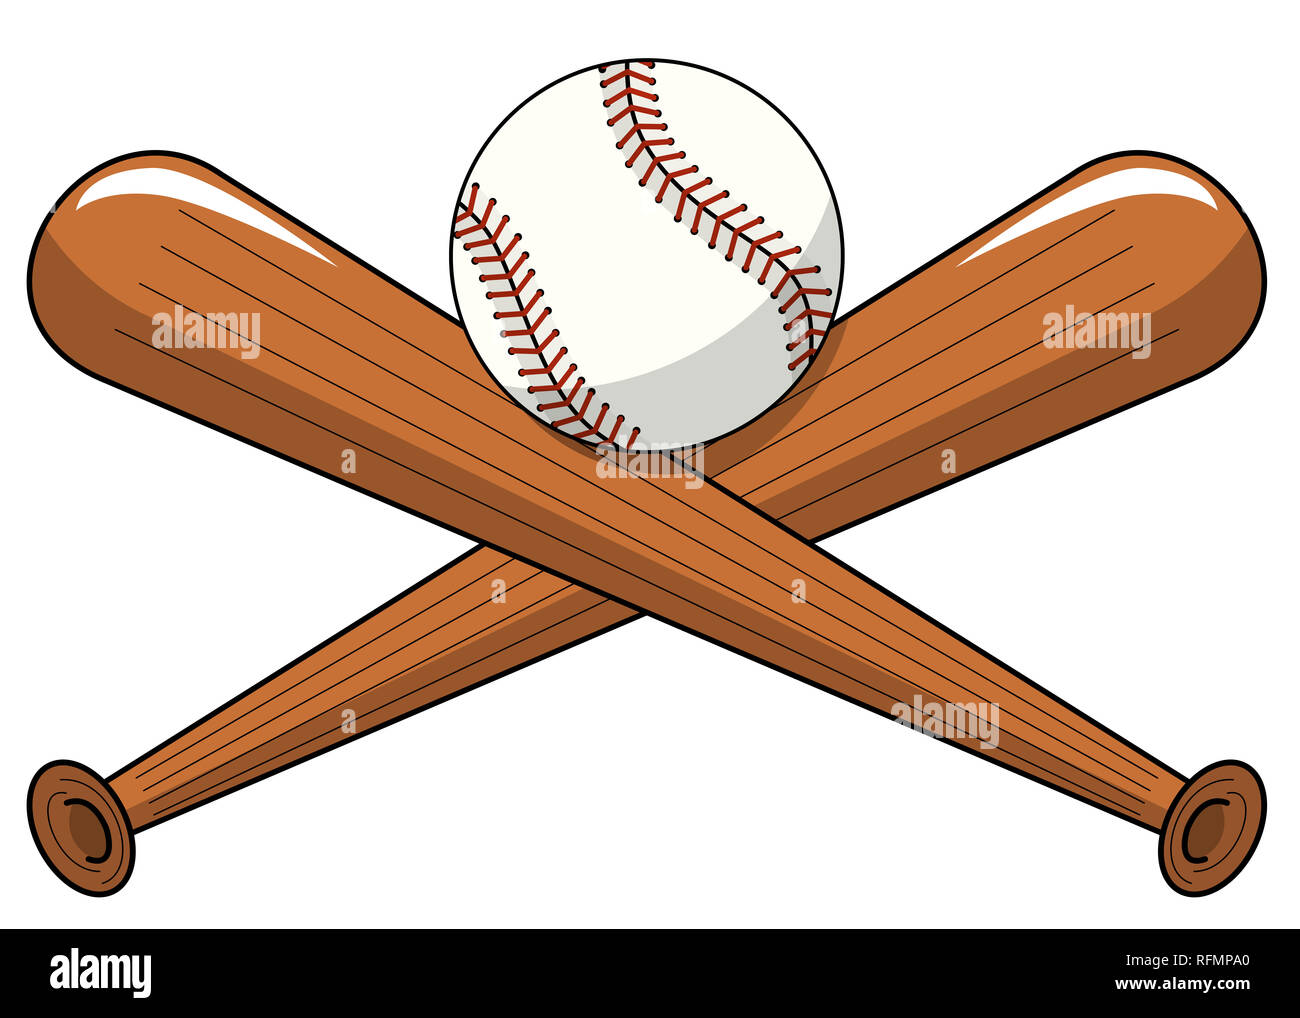 baseball ball crossed wooden bats logo cartoon vector isolated on white  Stock Photo - Alamy